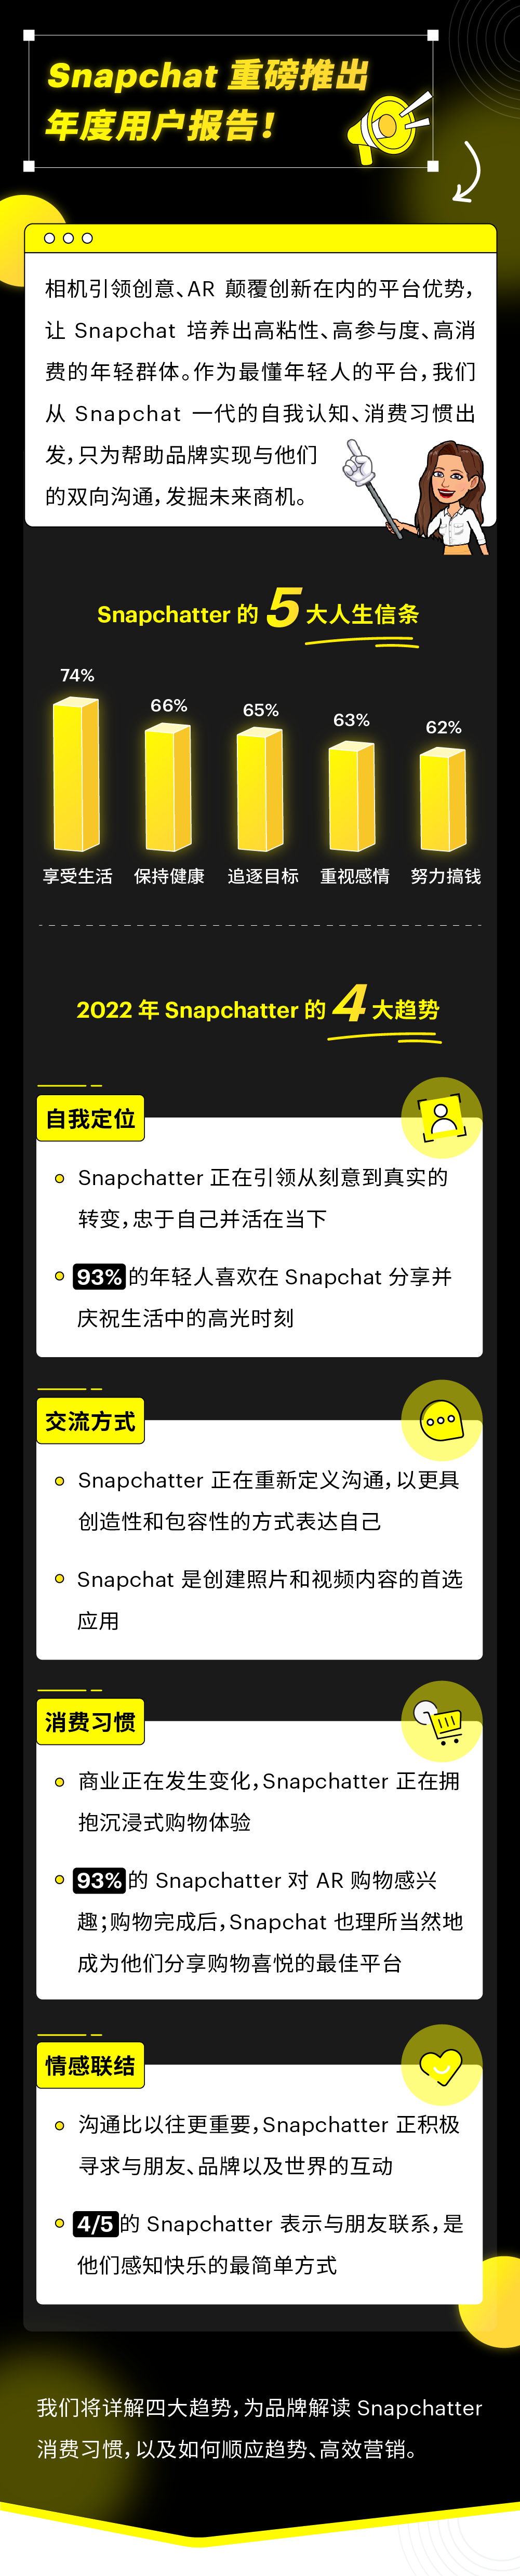 2022 Snapchat 全球用户报告出炉！一文了解四大营销趋势